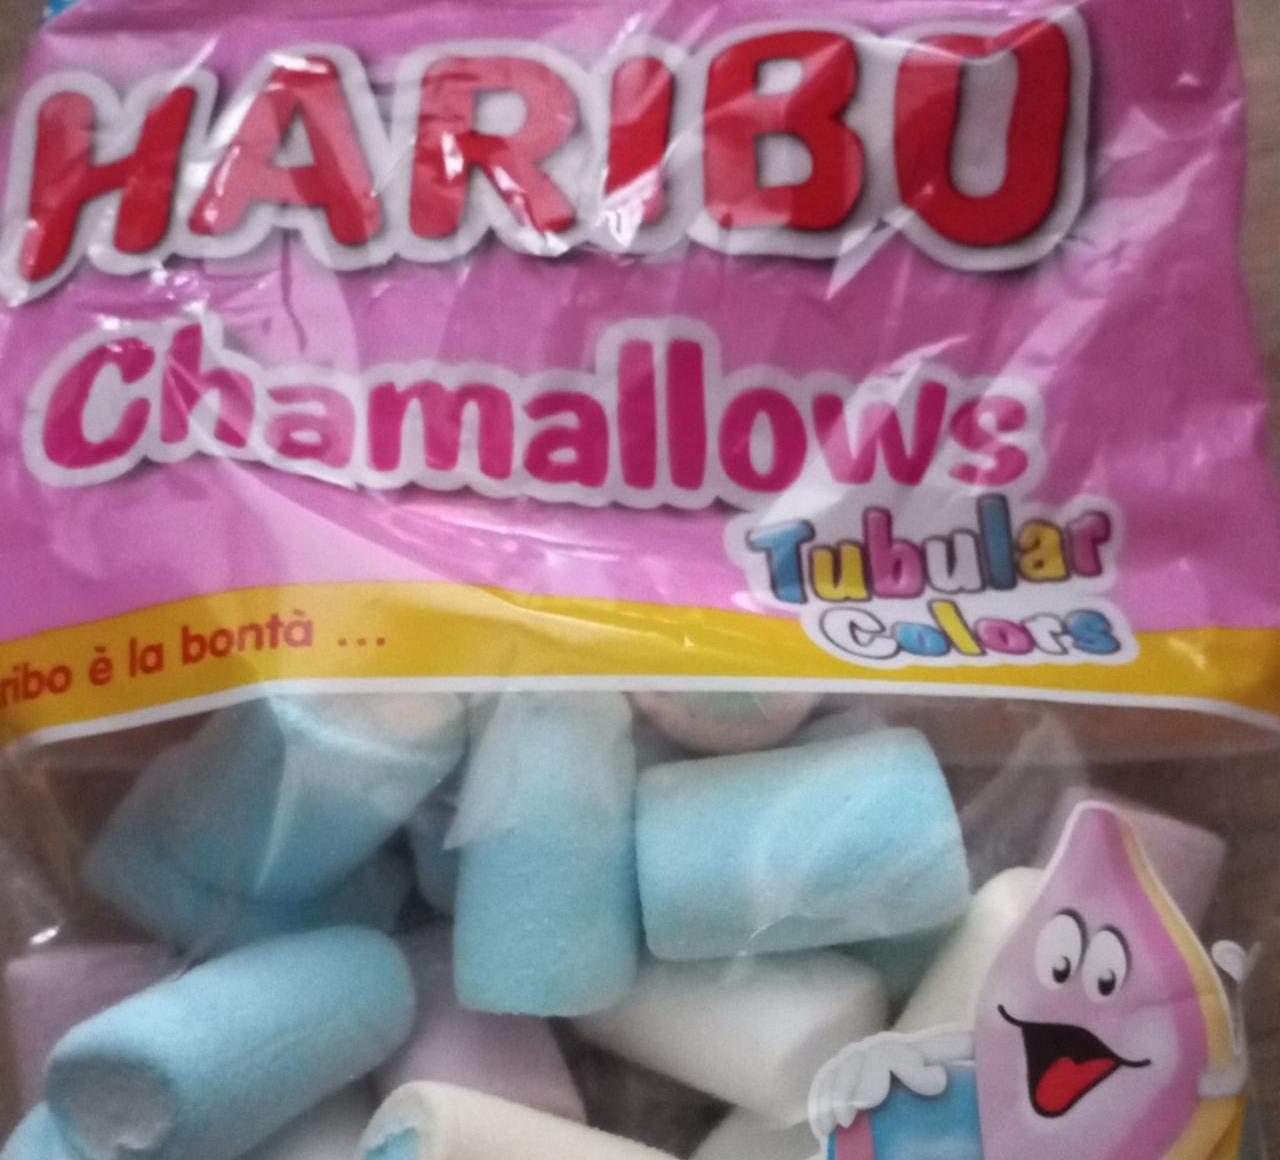 Fotografie - Chamallows tubular colors Haribo